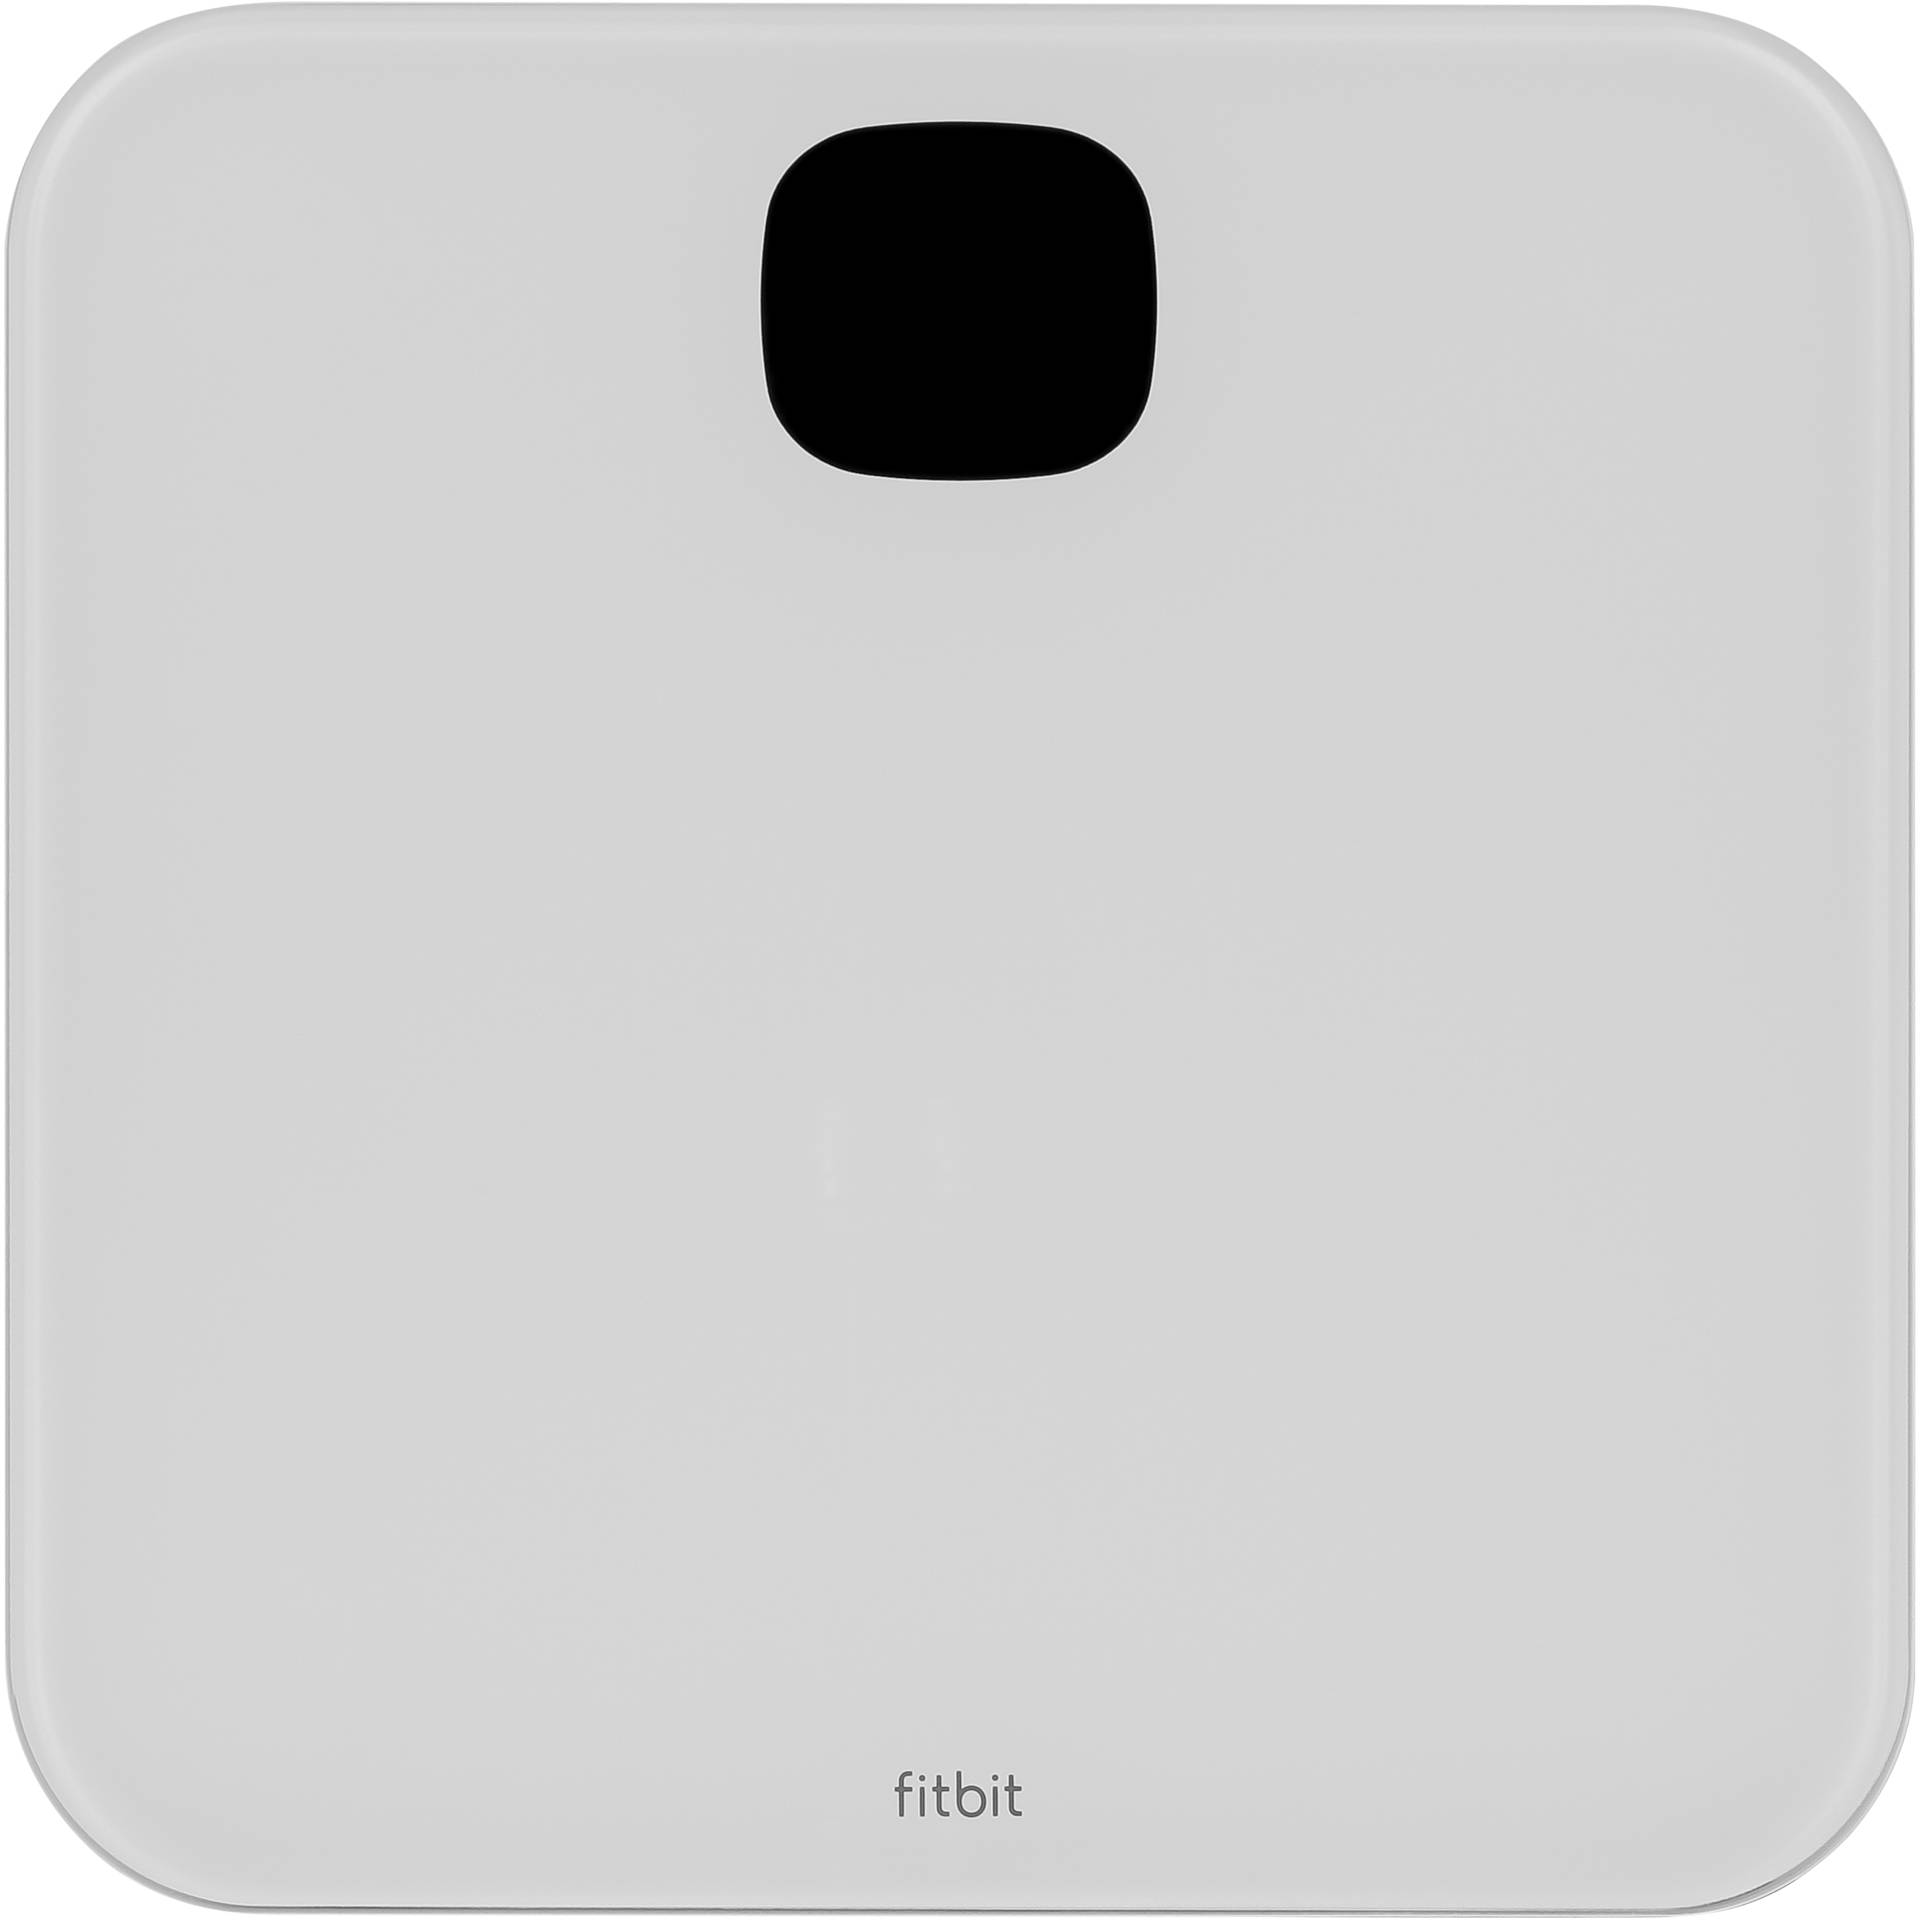 Fitbit Aria Air Quadratisch Weiß Elektronische Personenwaage